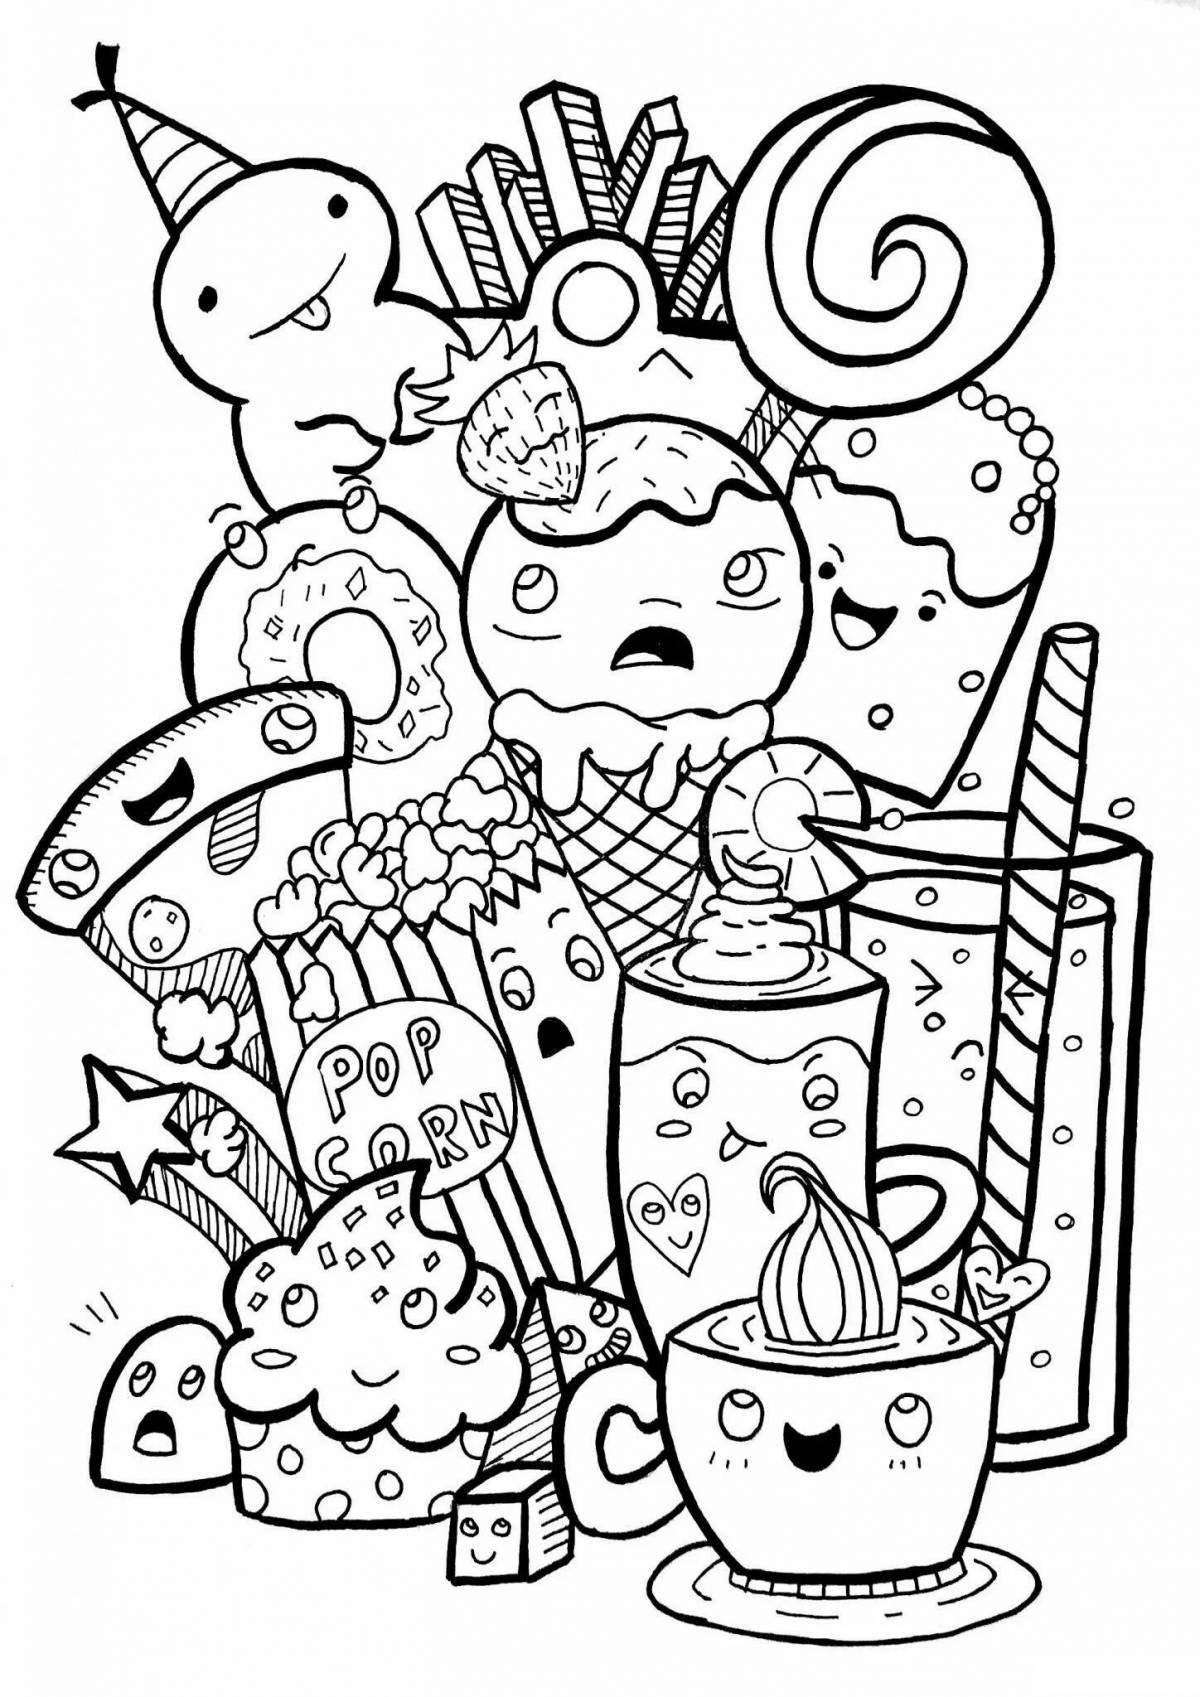 Sweet kawaii food coloring page